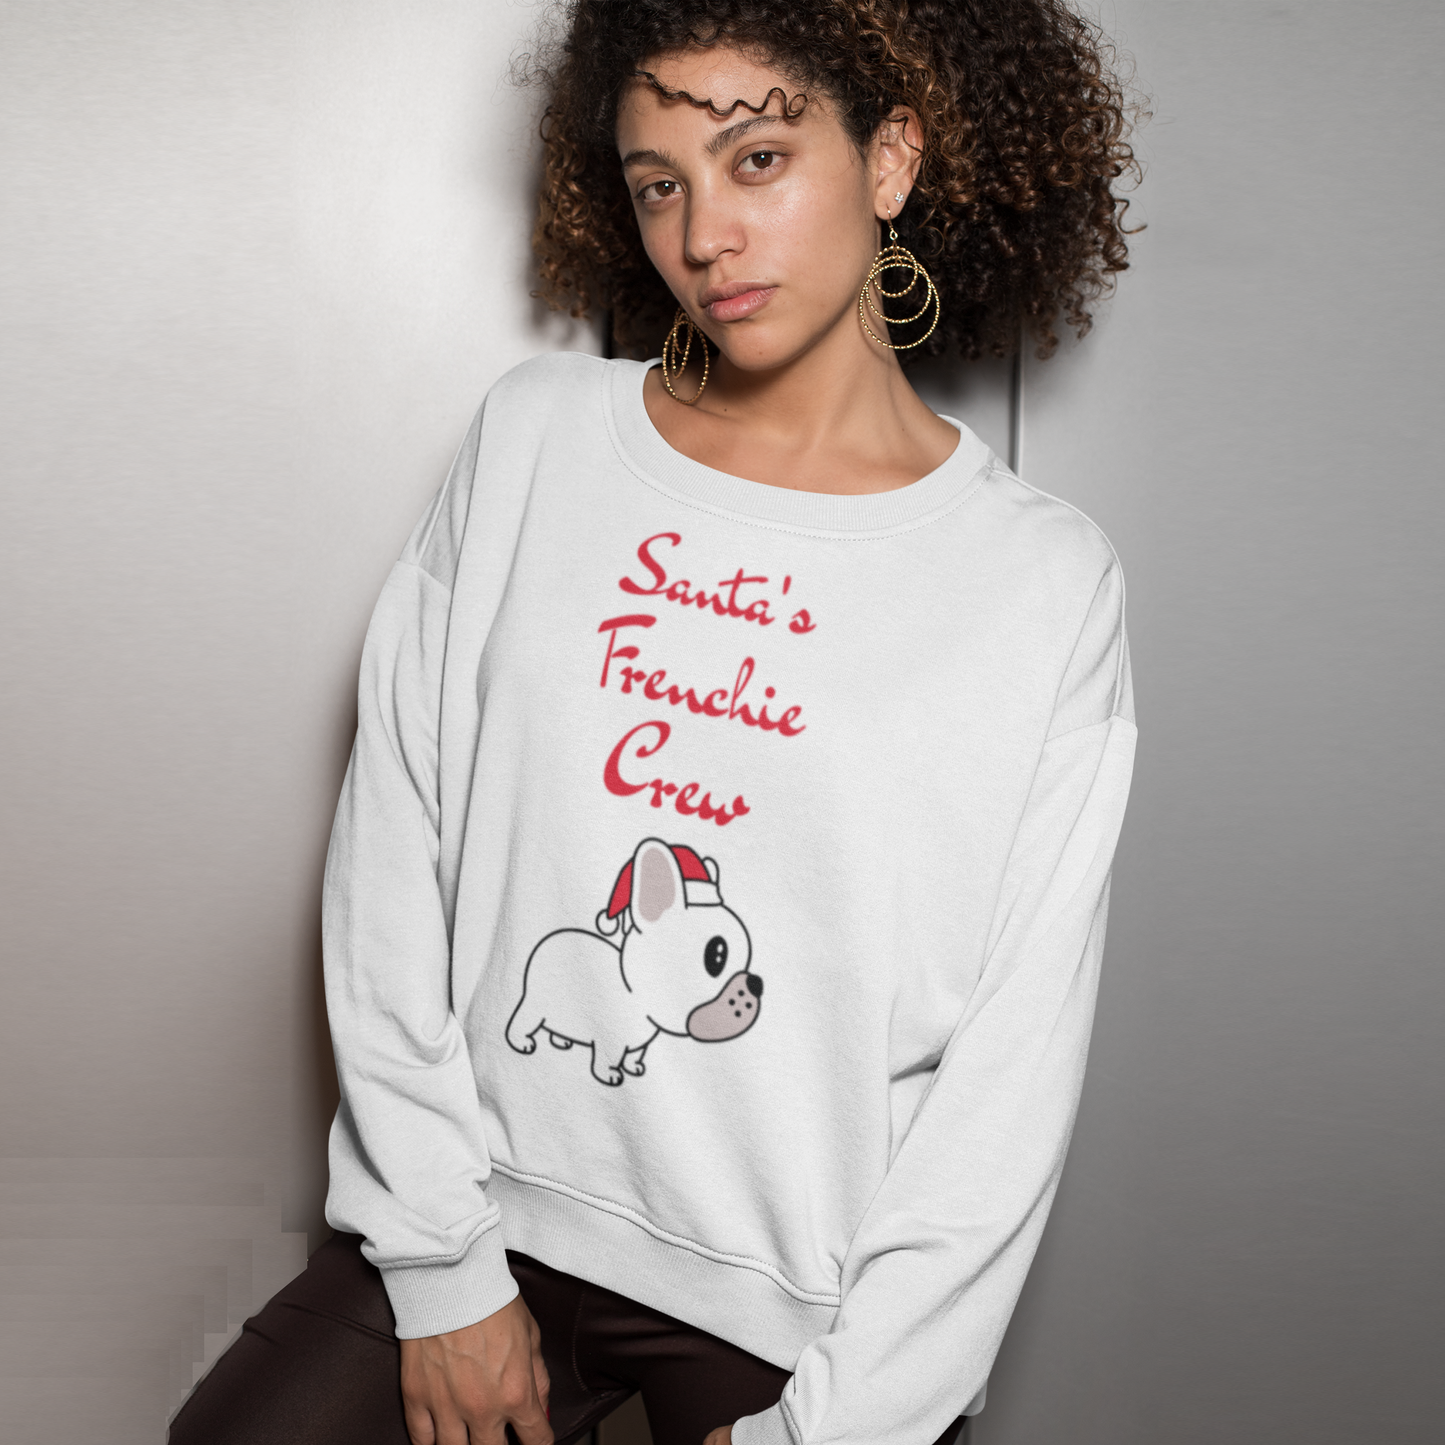 Santa's Frenchie Crew Sweater -  Unisex Sweatshirt